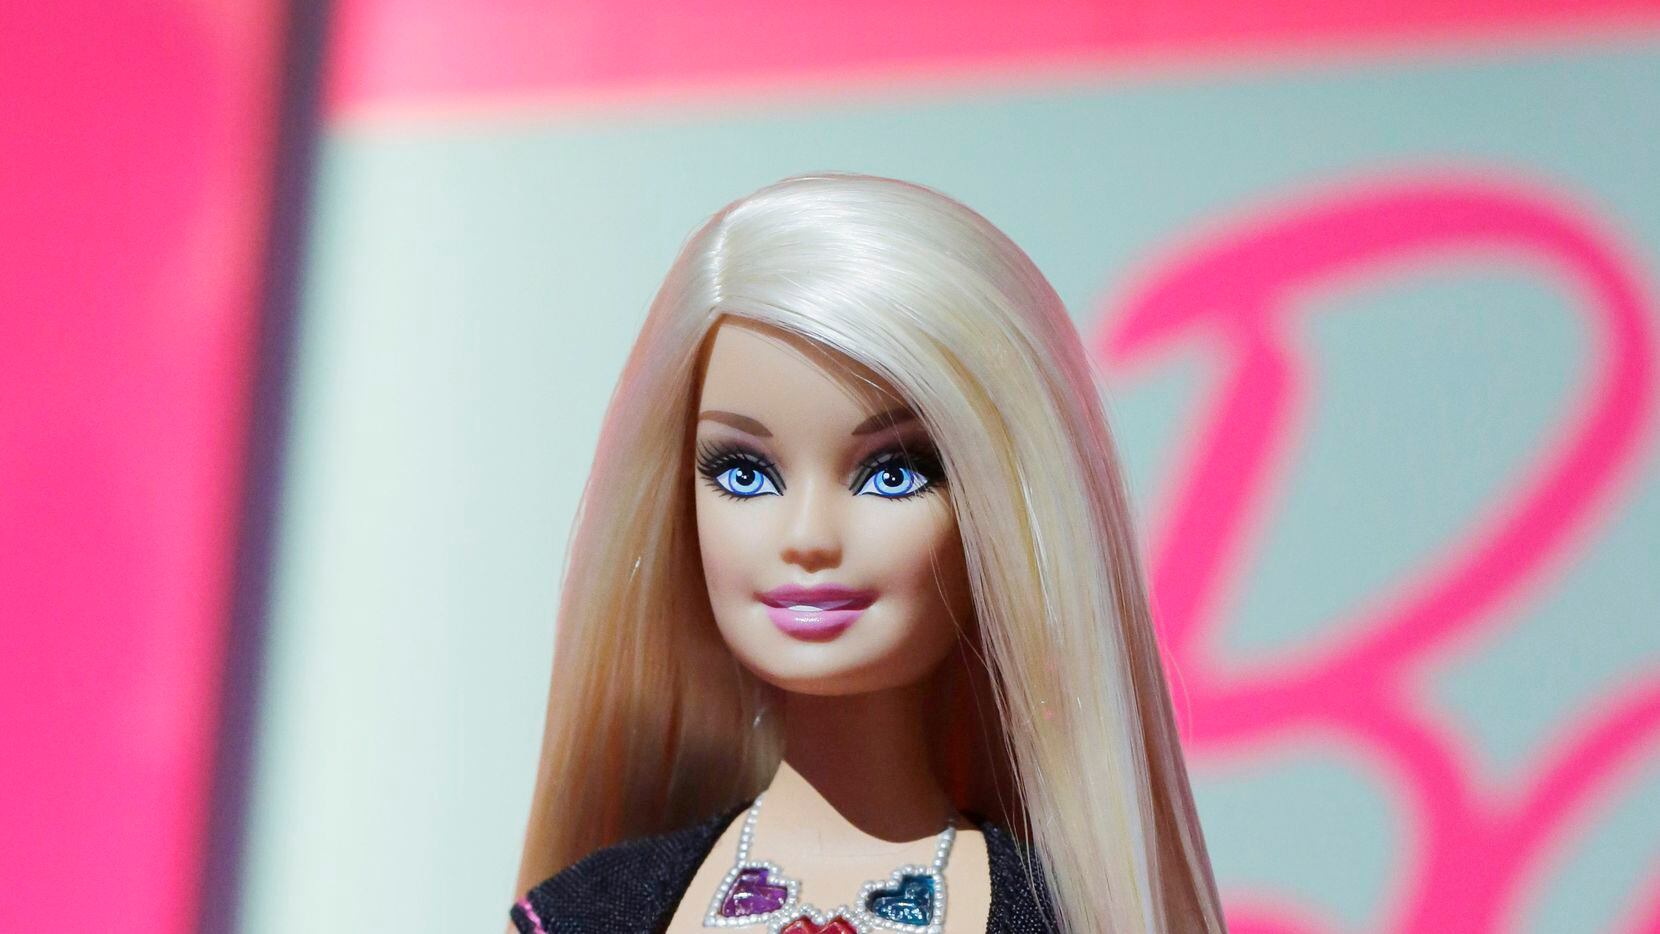 I'm a Barbie girl, in a Barbie world ... life in plastic, it's fa...